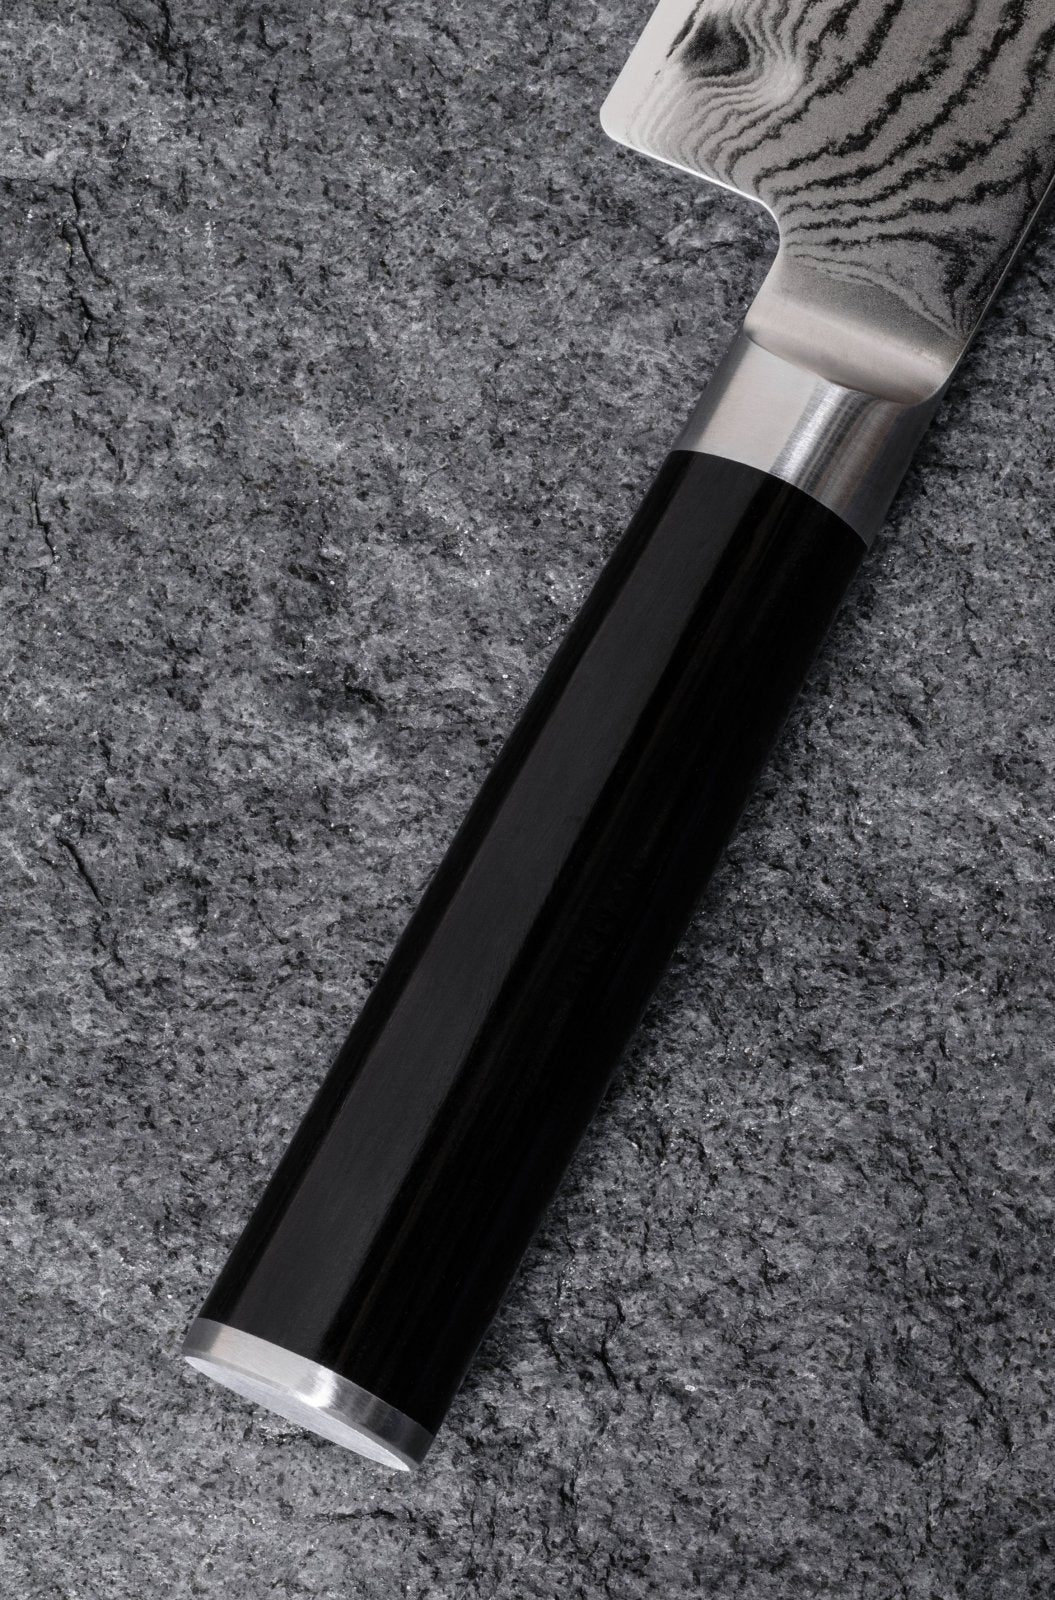 KAI Shun 20cm Scalloped Chefs Knife - KAI-DM-0719 - The Cotswold Knife Company